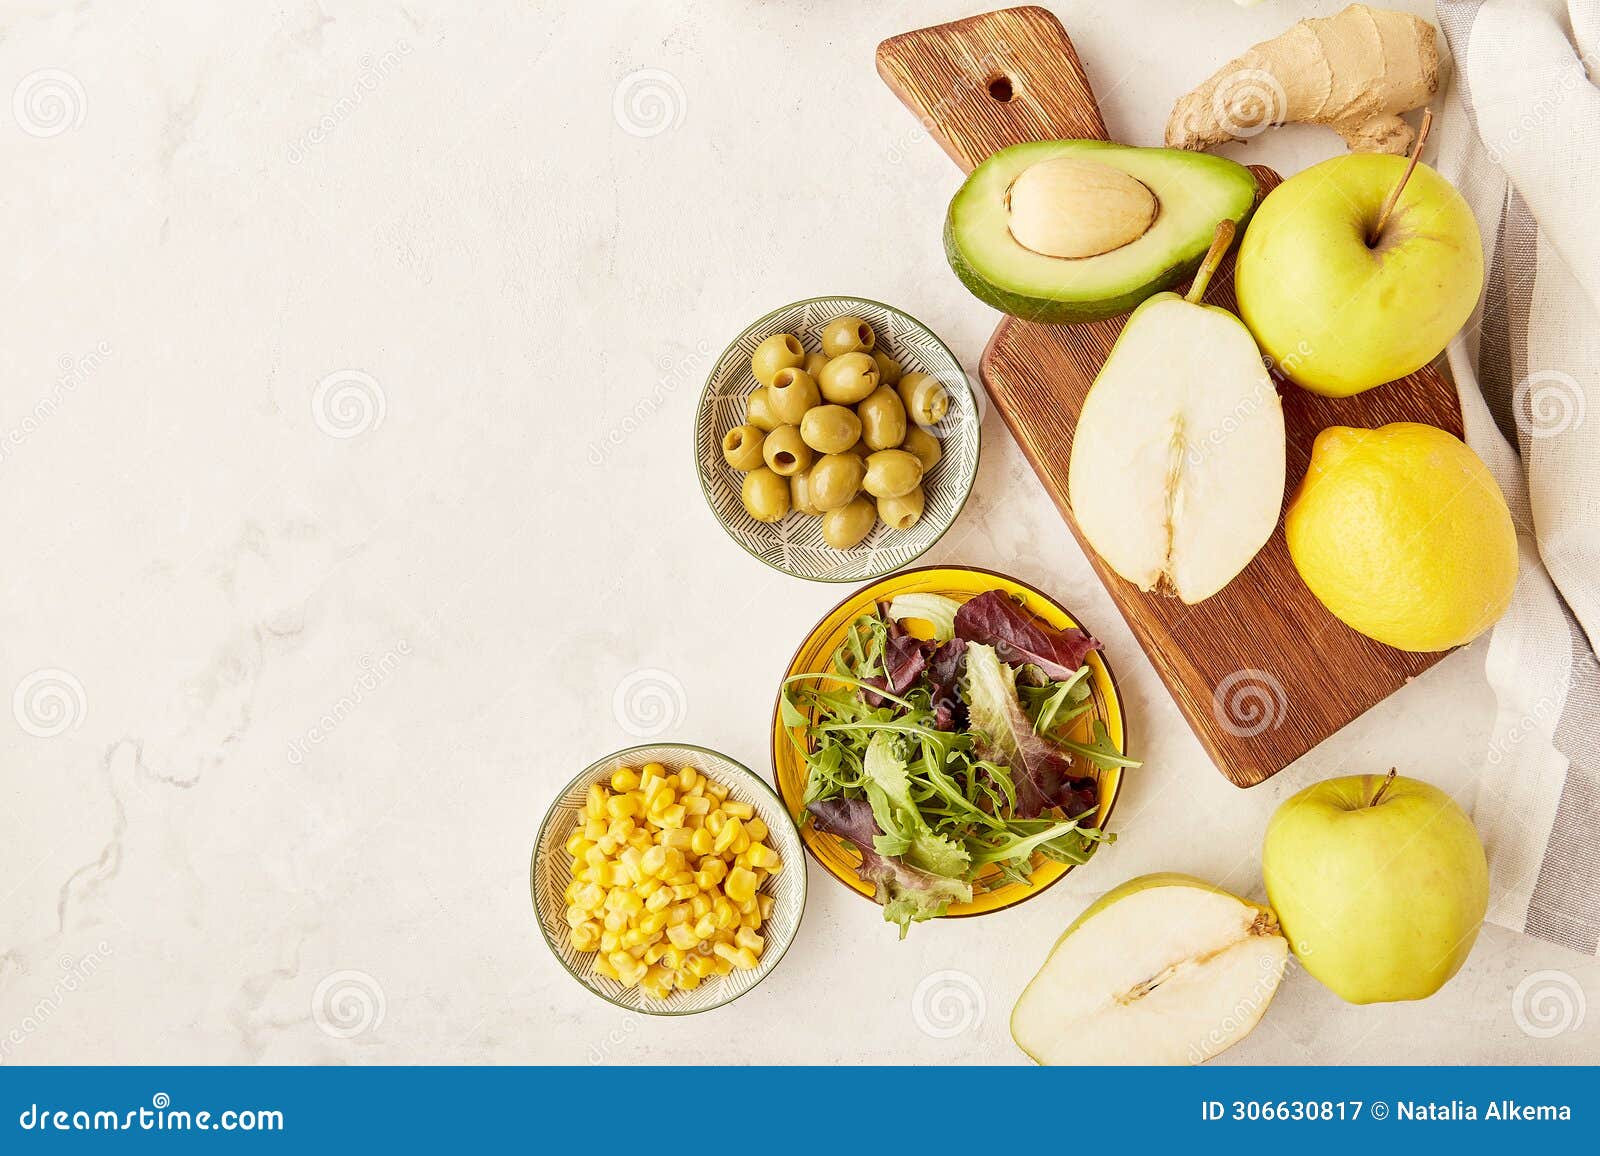 vegan menu for low carb, fodmap diet food. vegetables, fruits, greens, olives. healthy lifestyle.